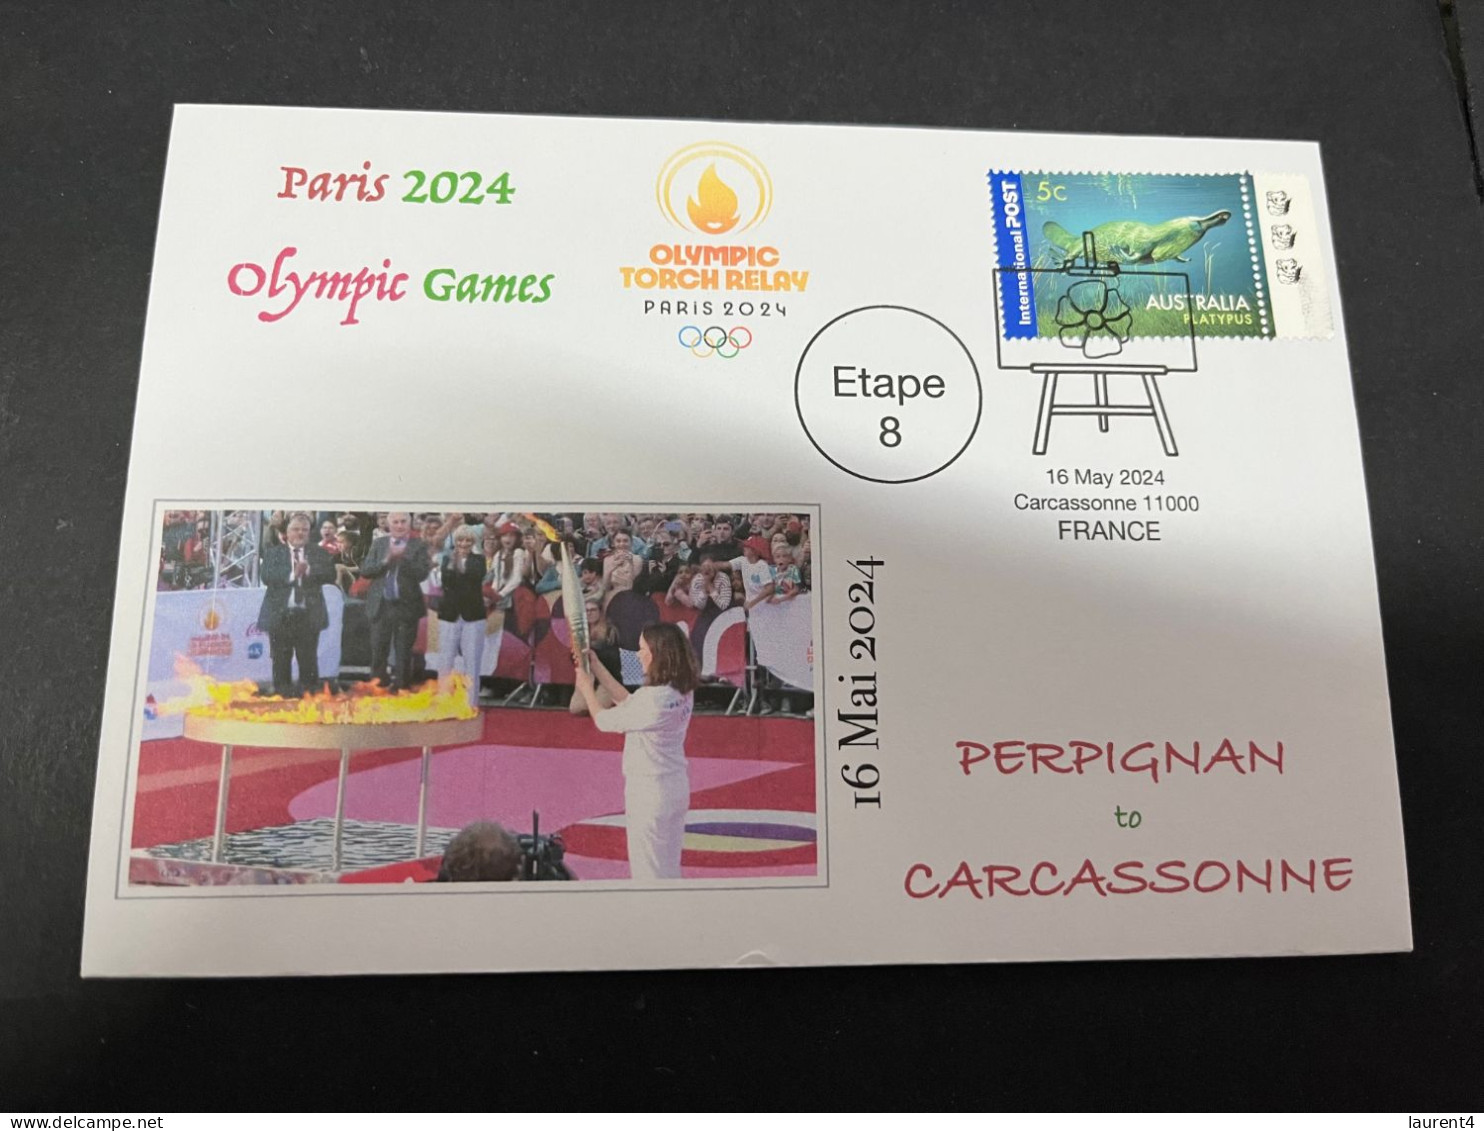 17-5-2024 (5 Z 17) Paris Olympic Games 2024 - Torch Relay (Etape 8) In Carcassonne (16-5-2024) With OZ Stamp - Eté 2024 : Paris